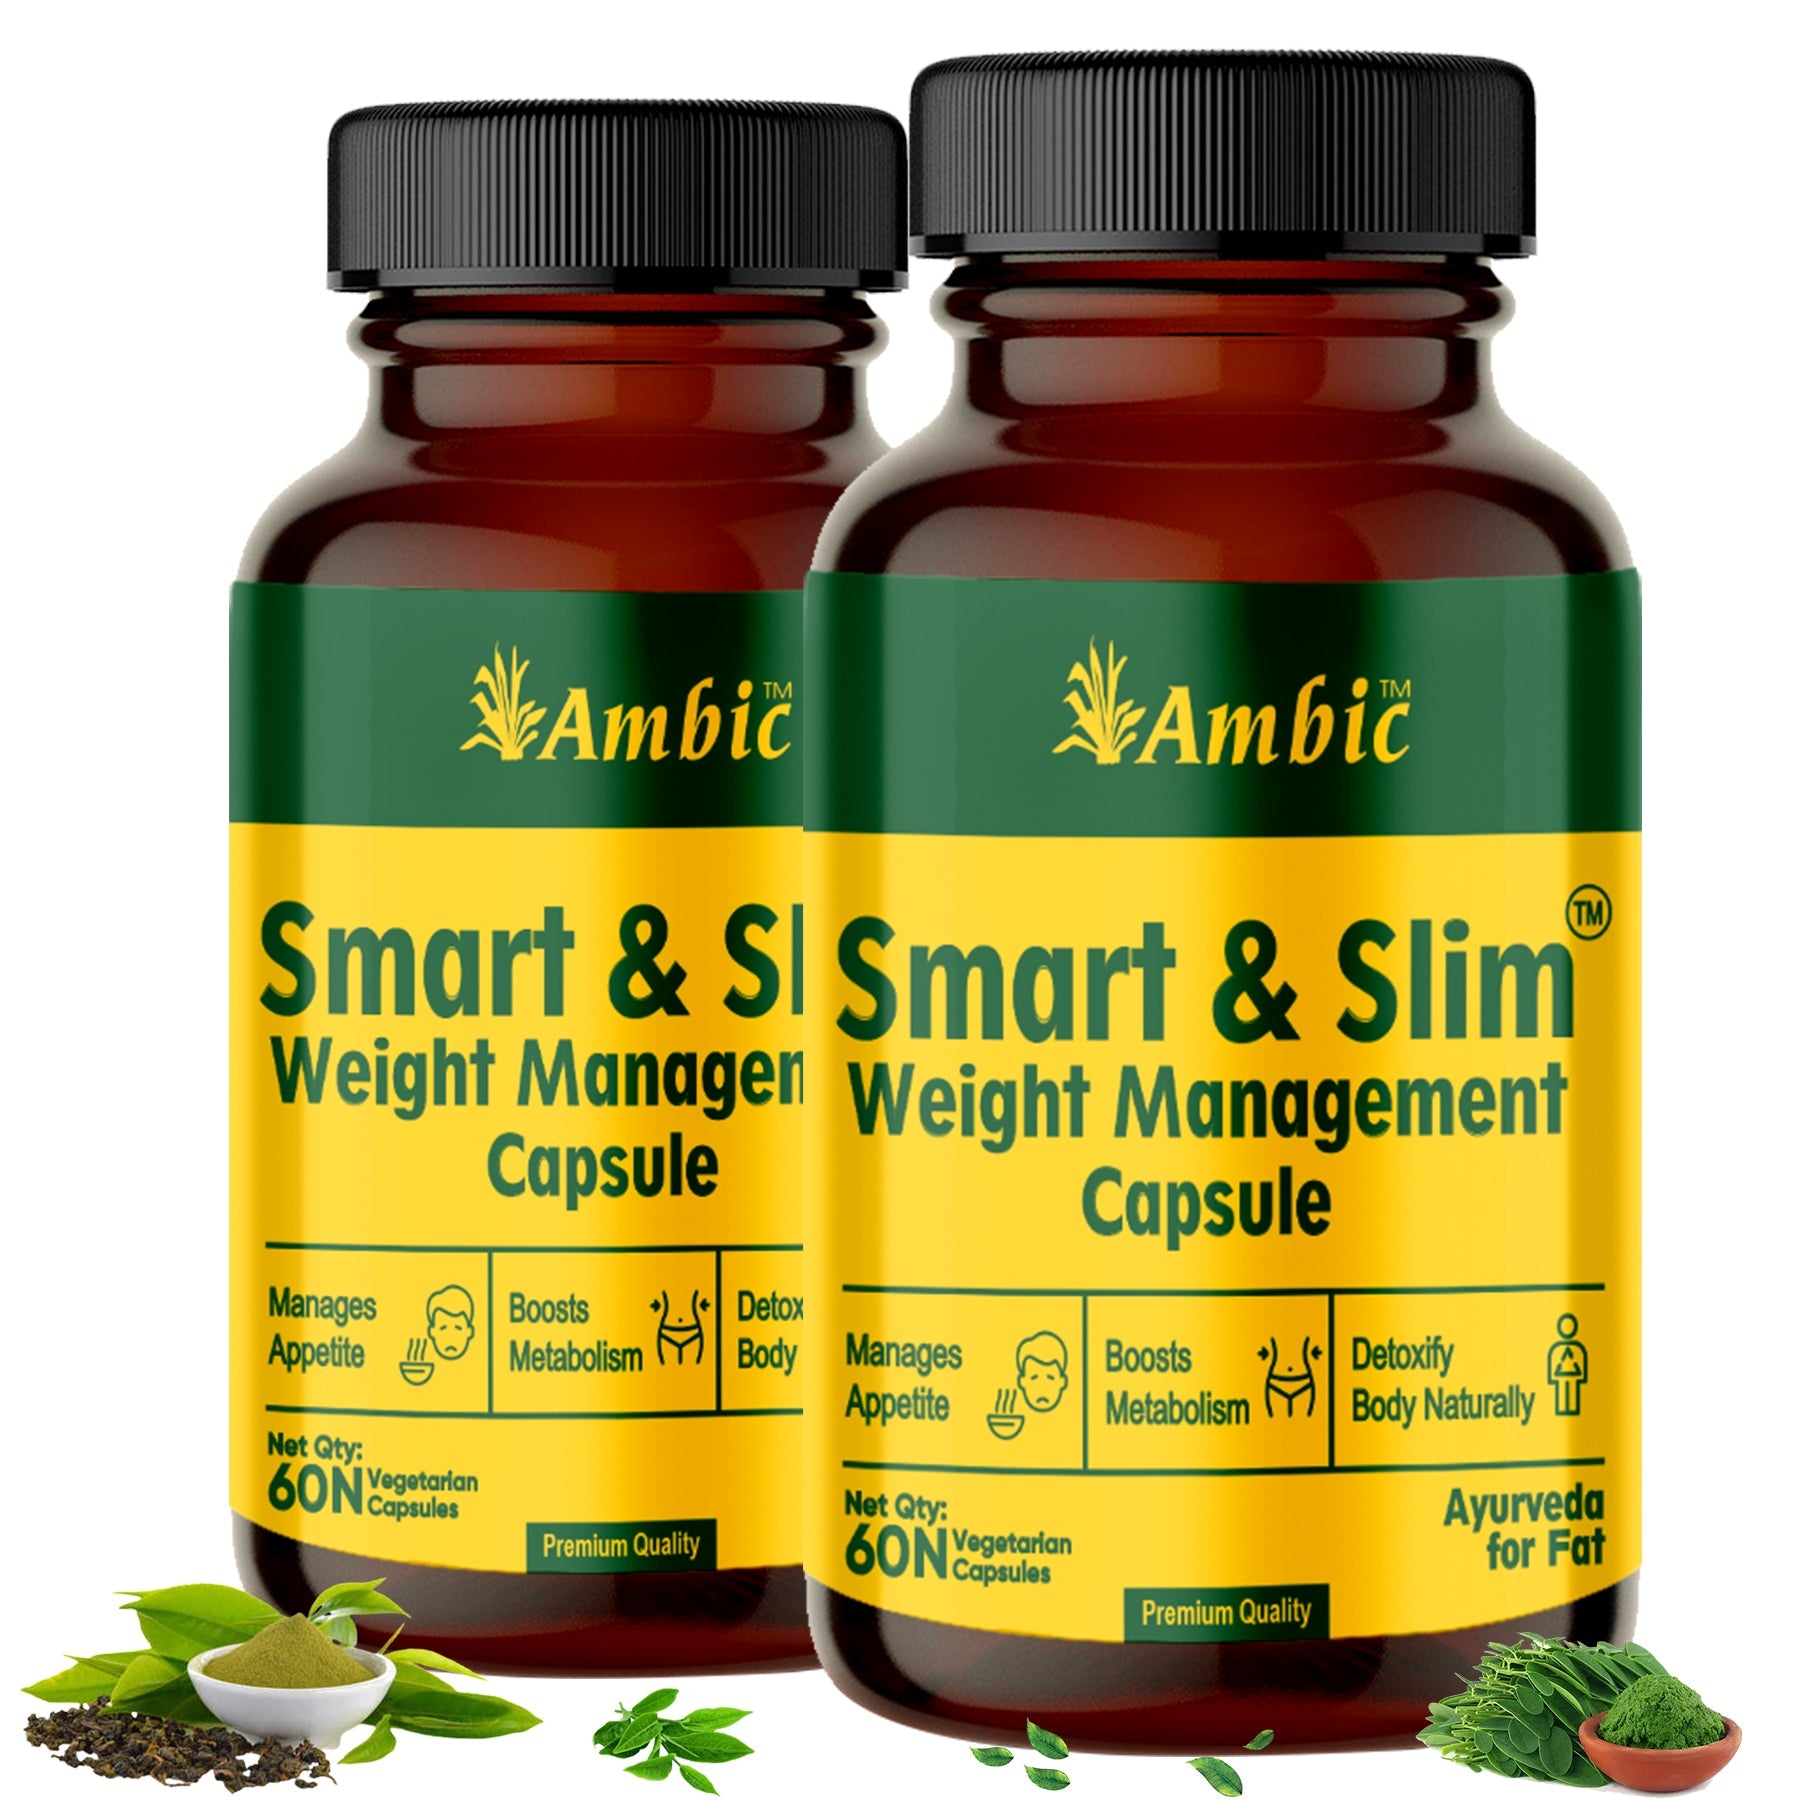 AMBIC SMART & SLIM Weight Loss Capsule